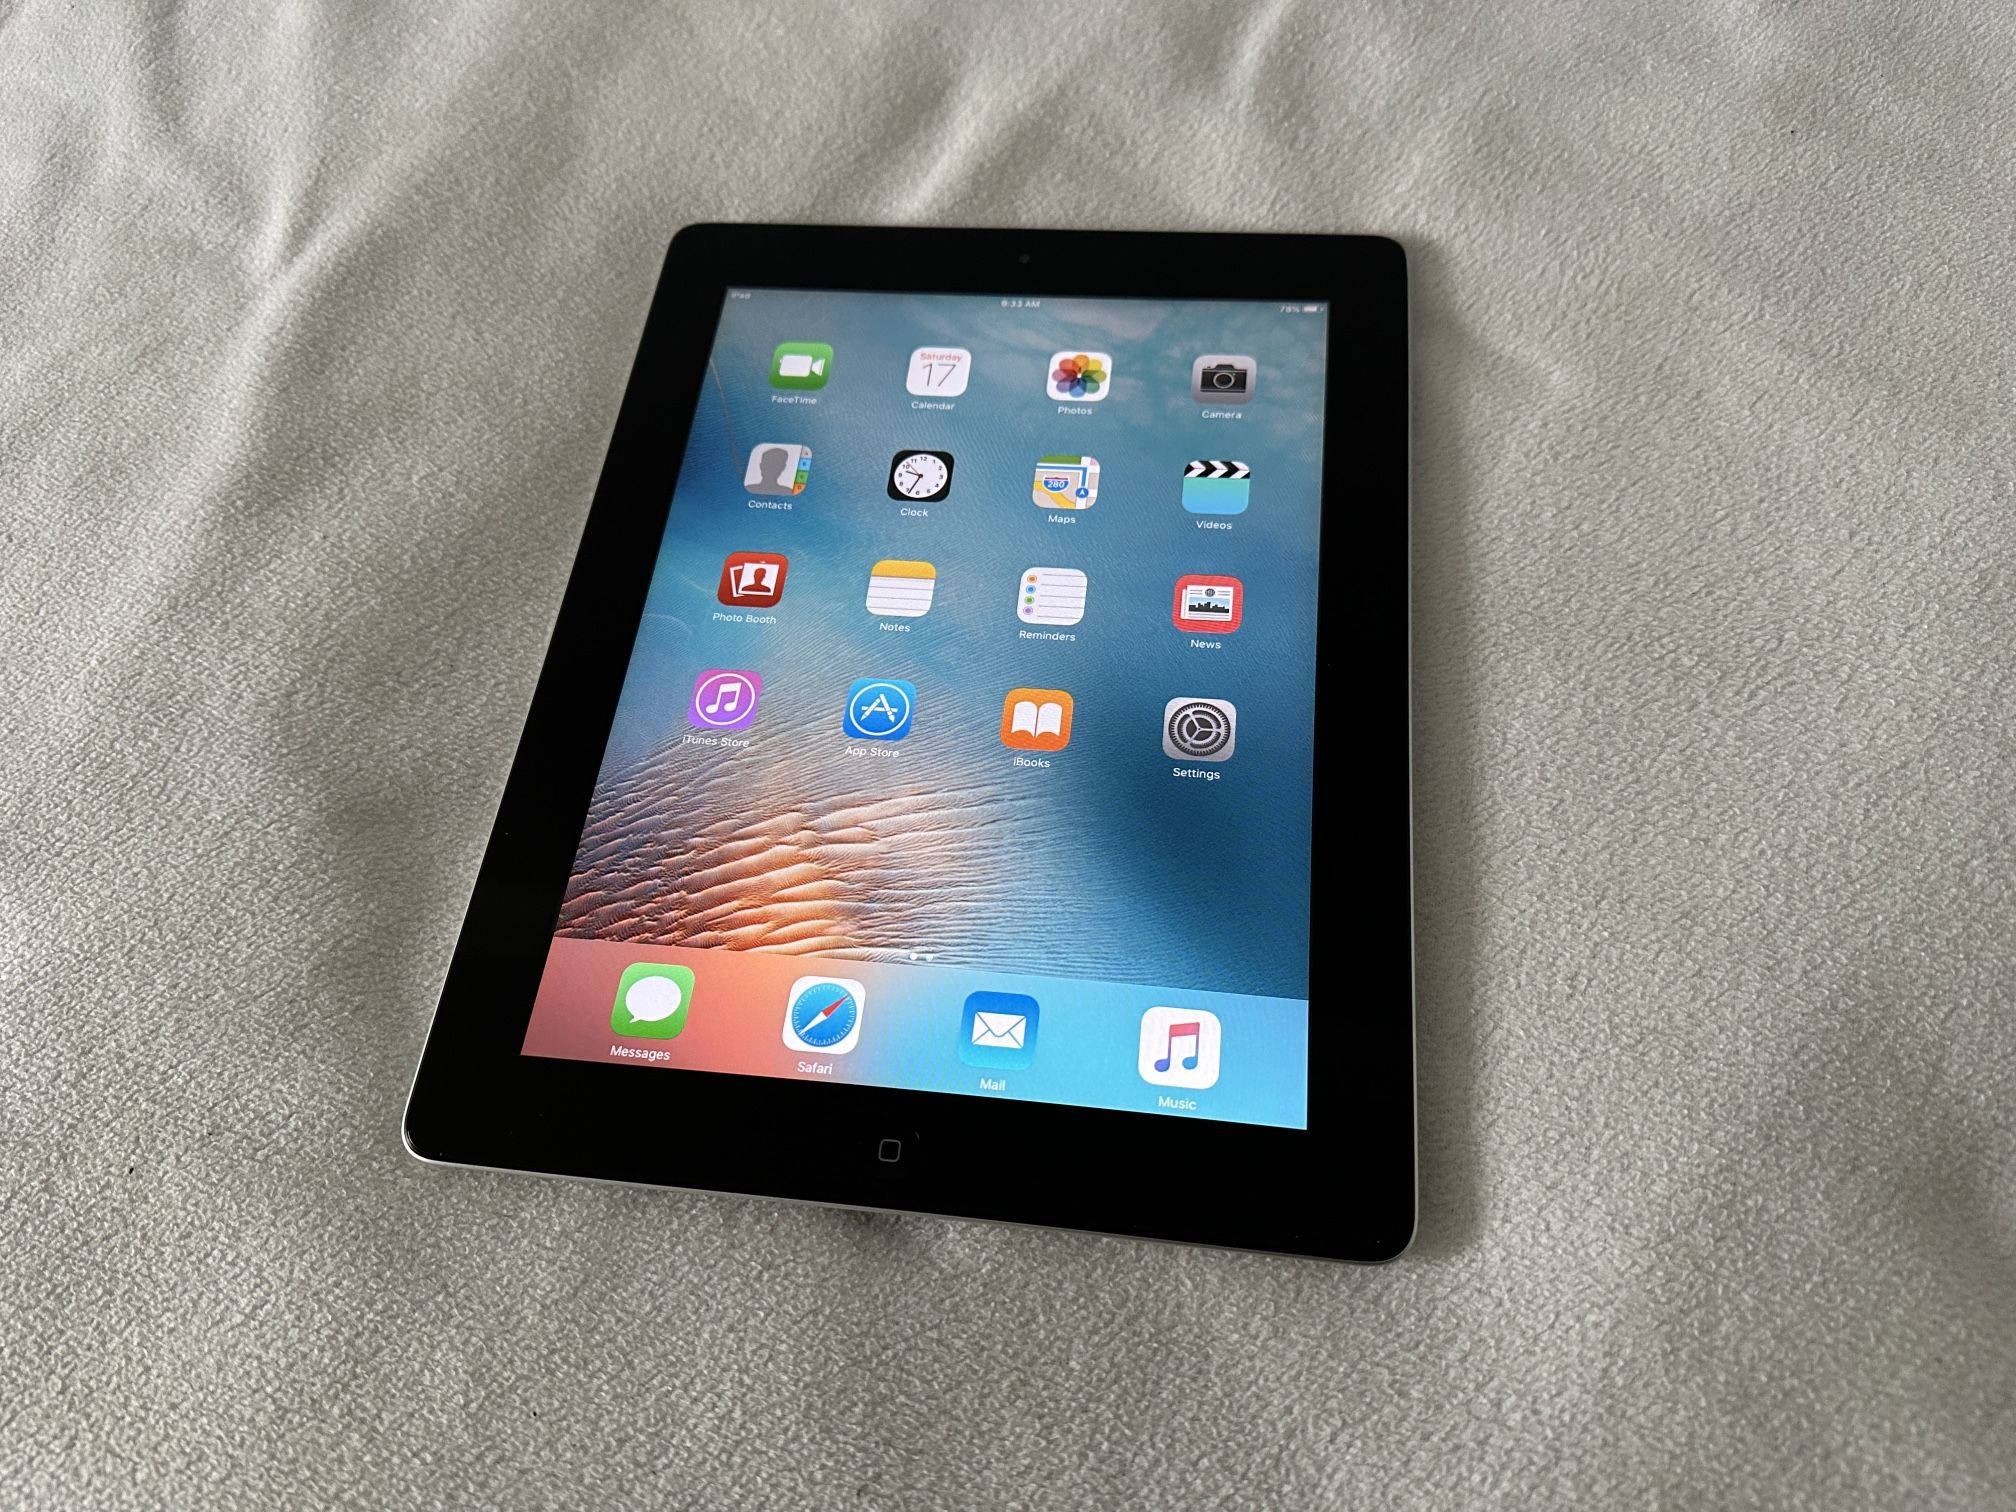 Apple iPad 2 A1395 (WiFi) 16GB Black Excellent Condition Unlocked 